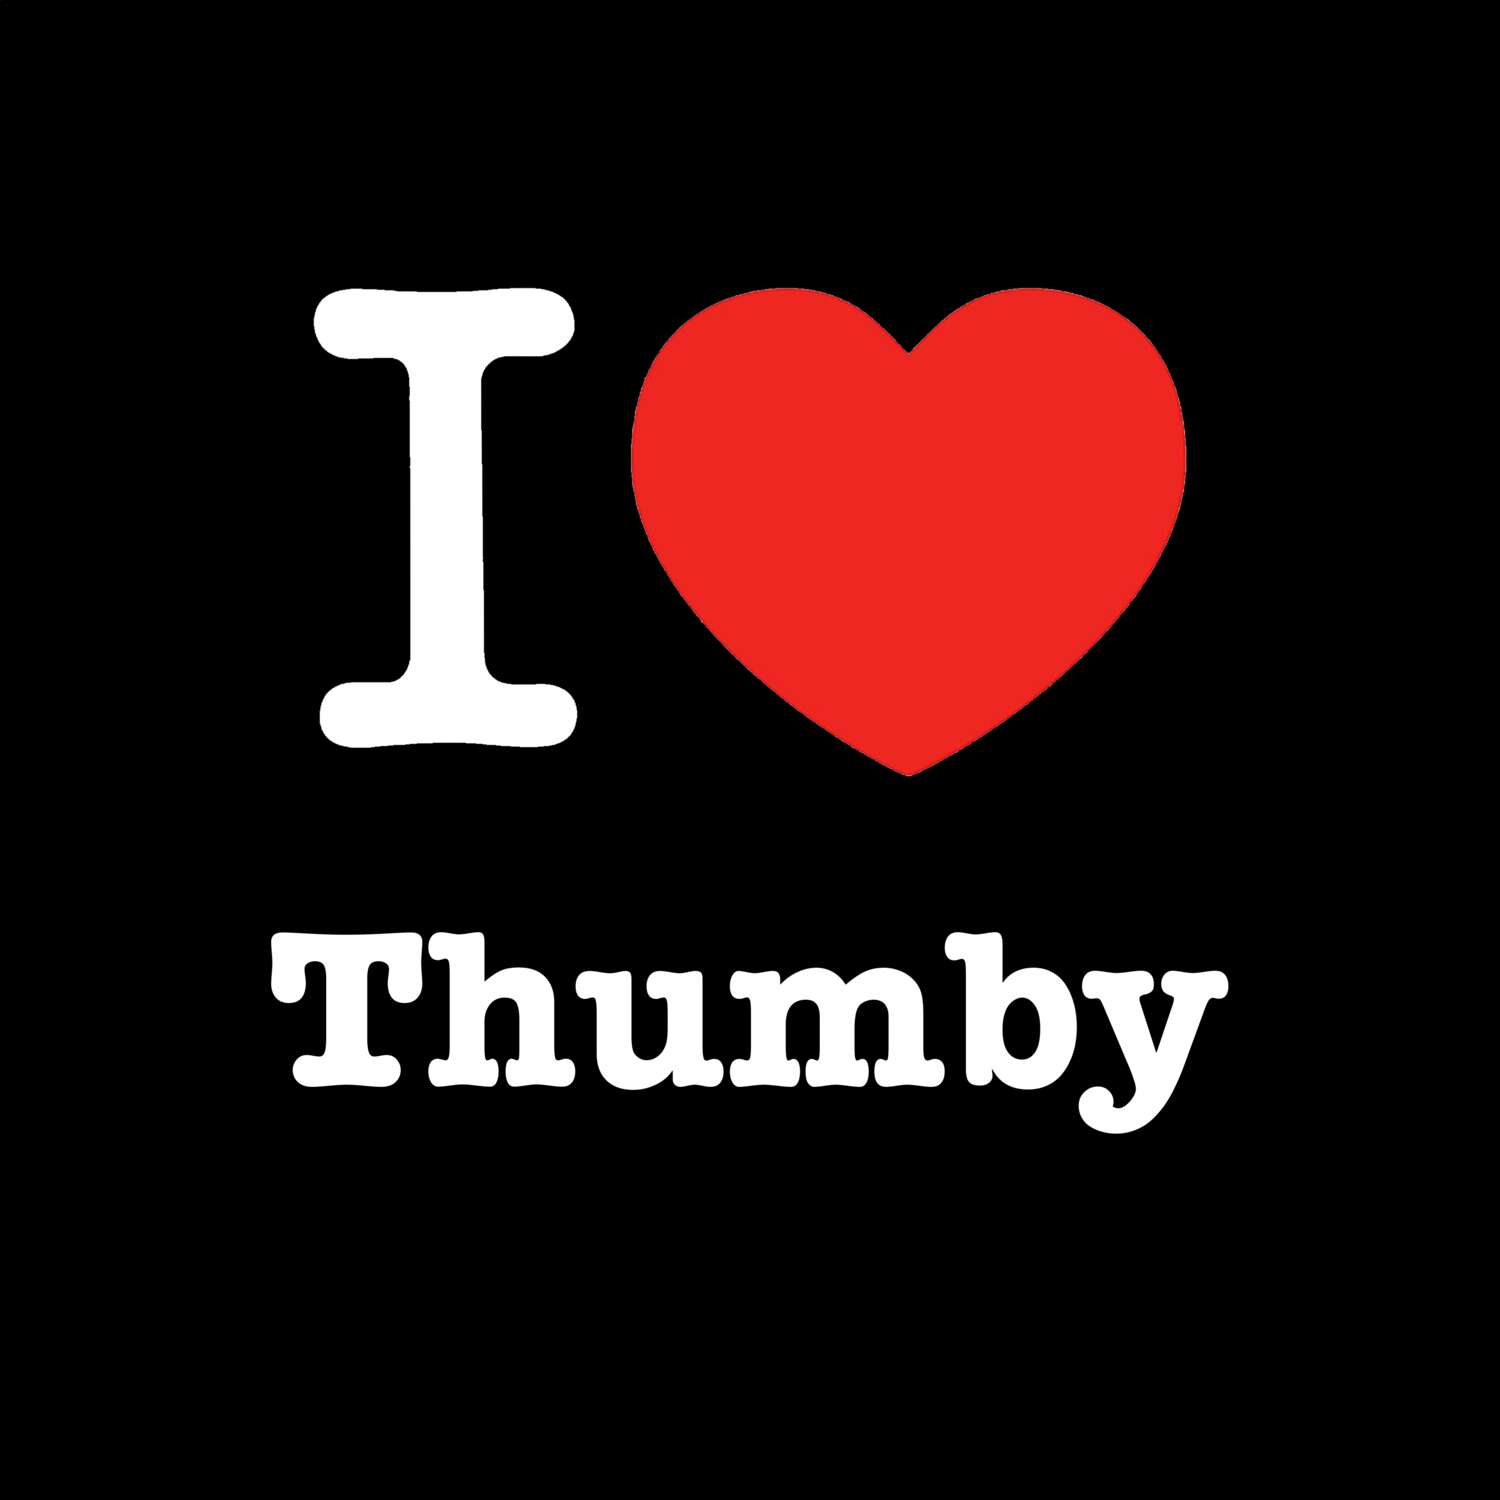 Thumby T-Shirt »I love«